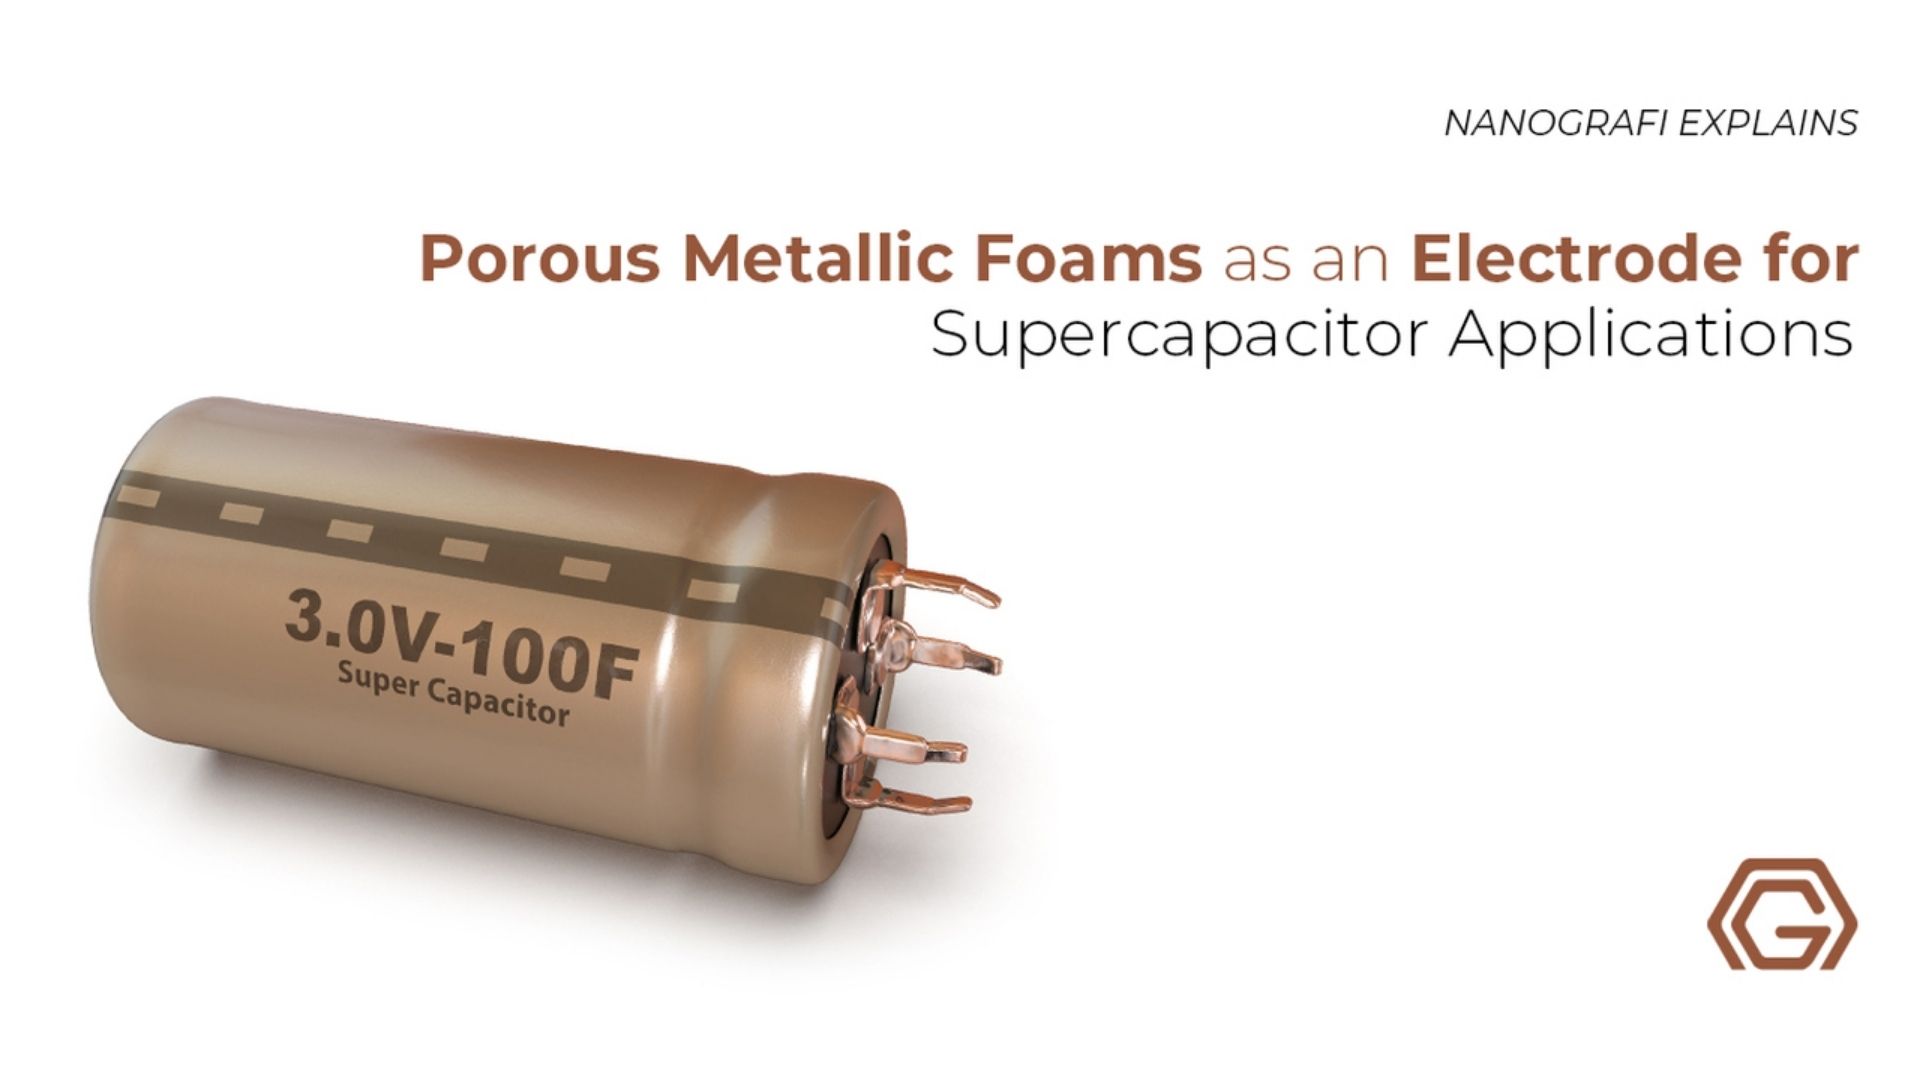 Porous metallic foams as an electrode for supercapacitor applications